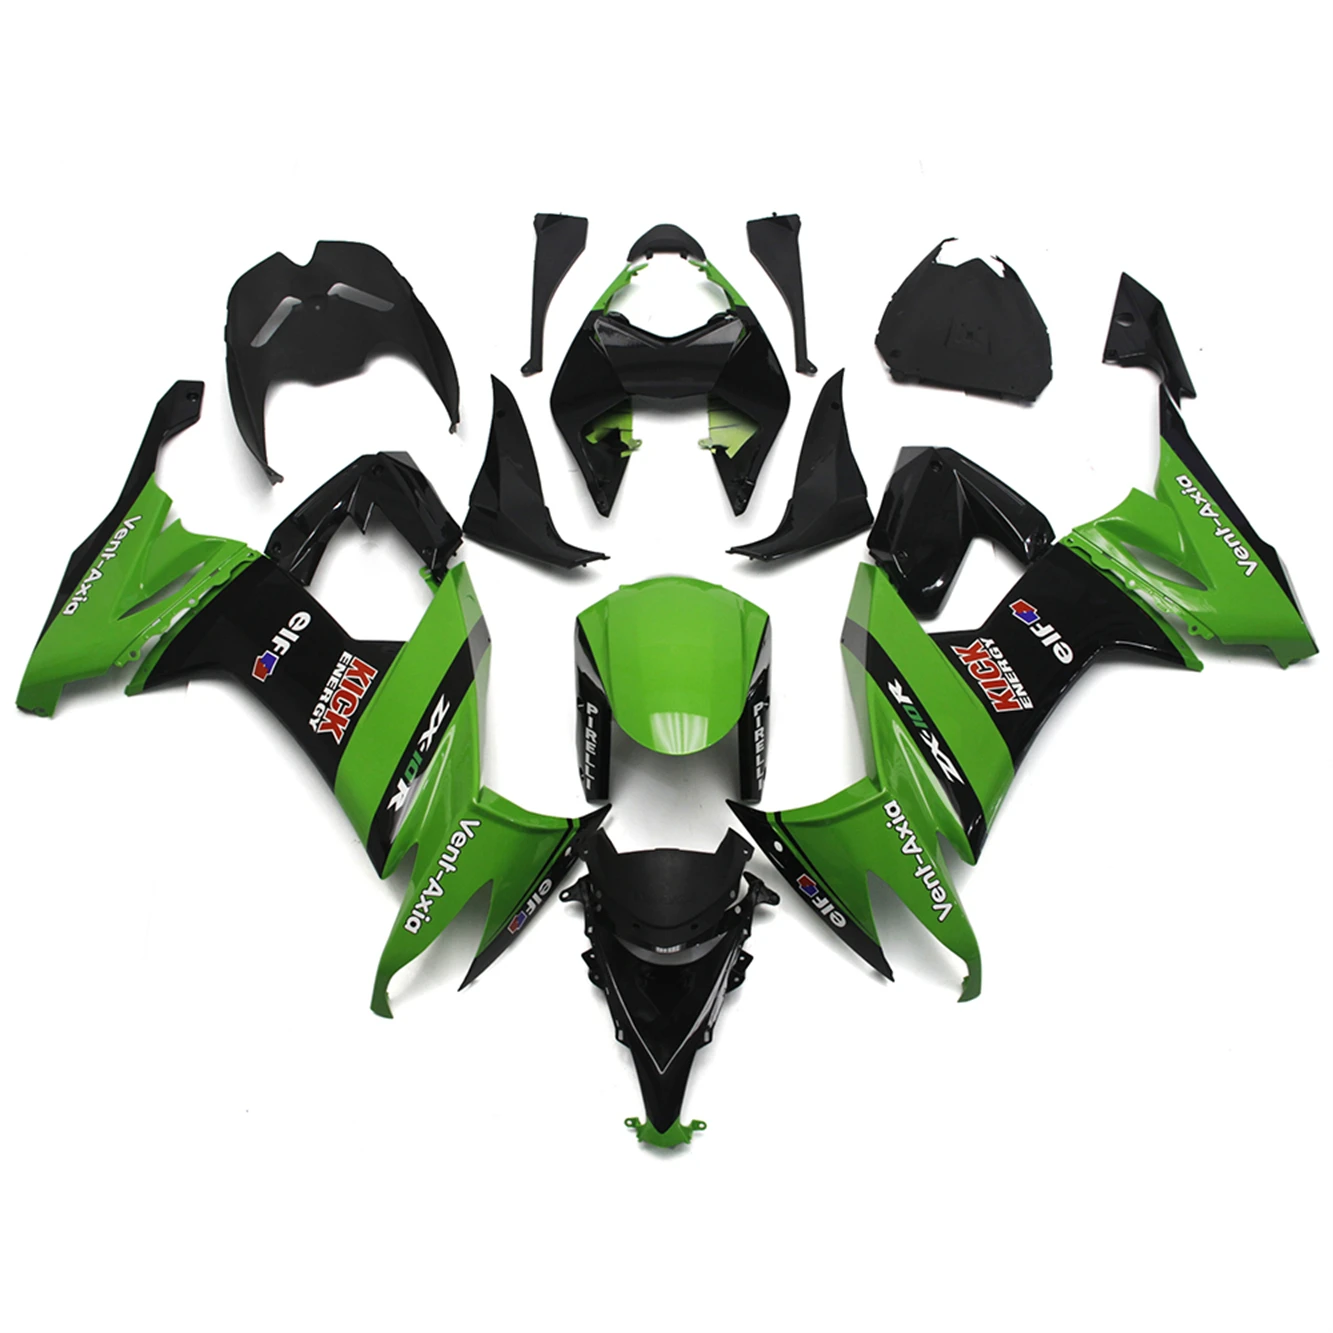 

ABS motocicleta inteira carenagens Kit, carroçaria Fairing Set, apto para Ninja ZX-10R, ZX10R, ZX 10R, 2008, 2009, 2010, 08, 09,